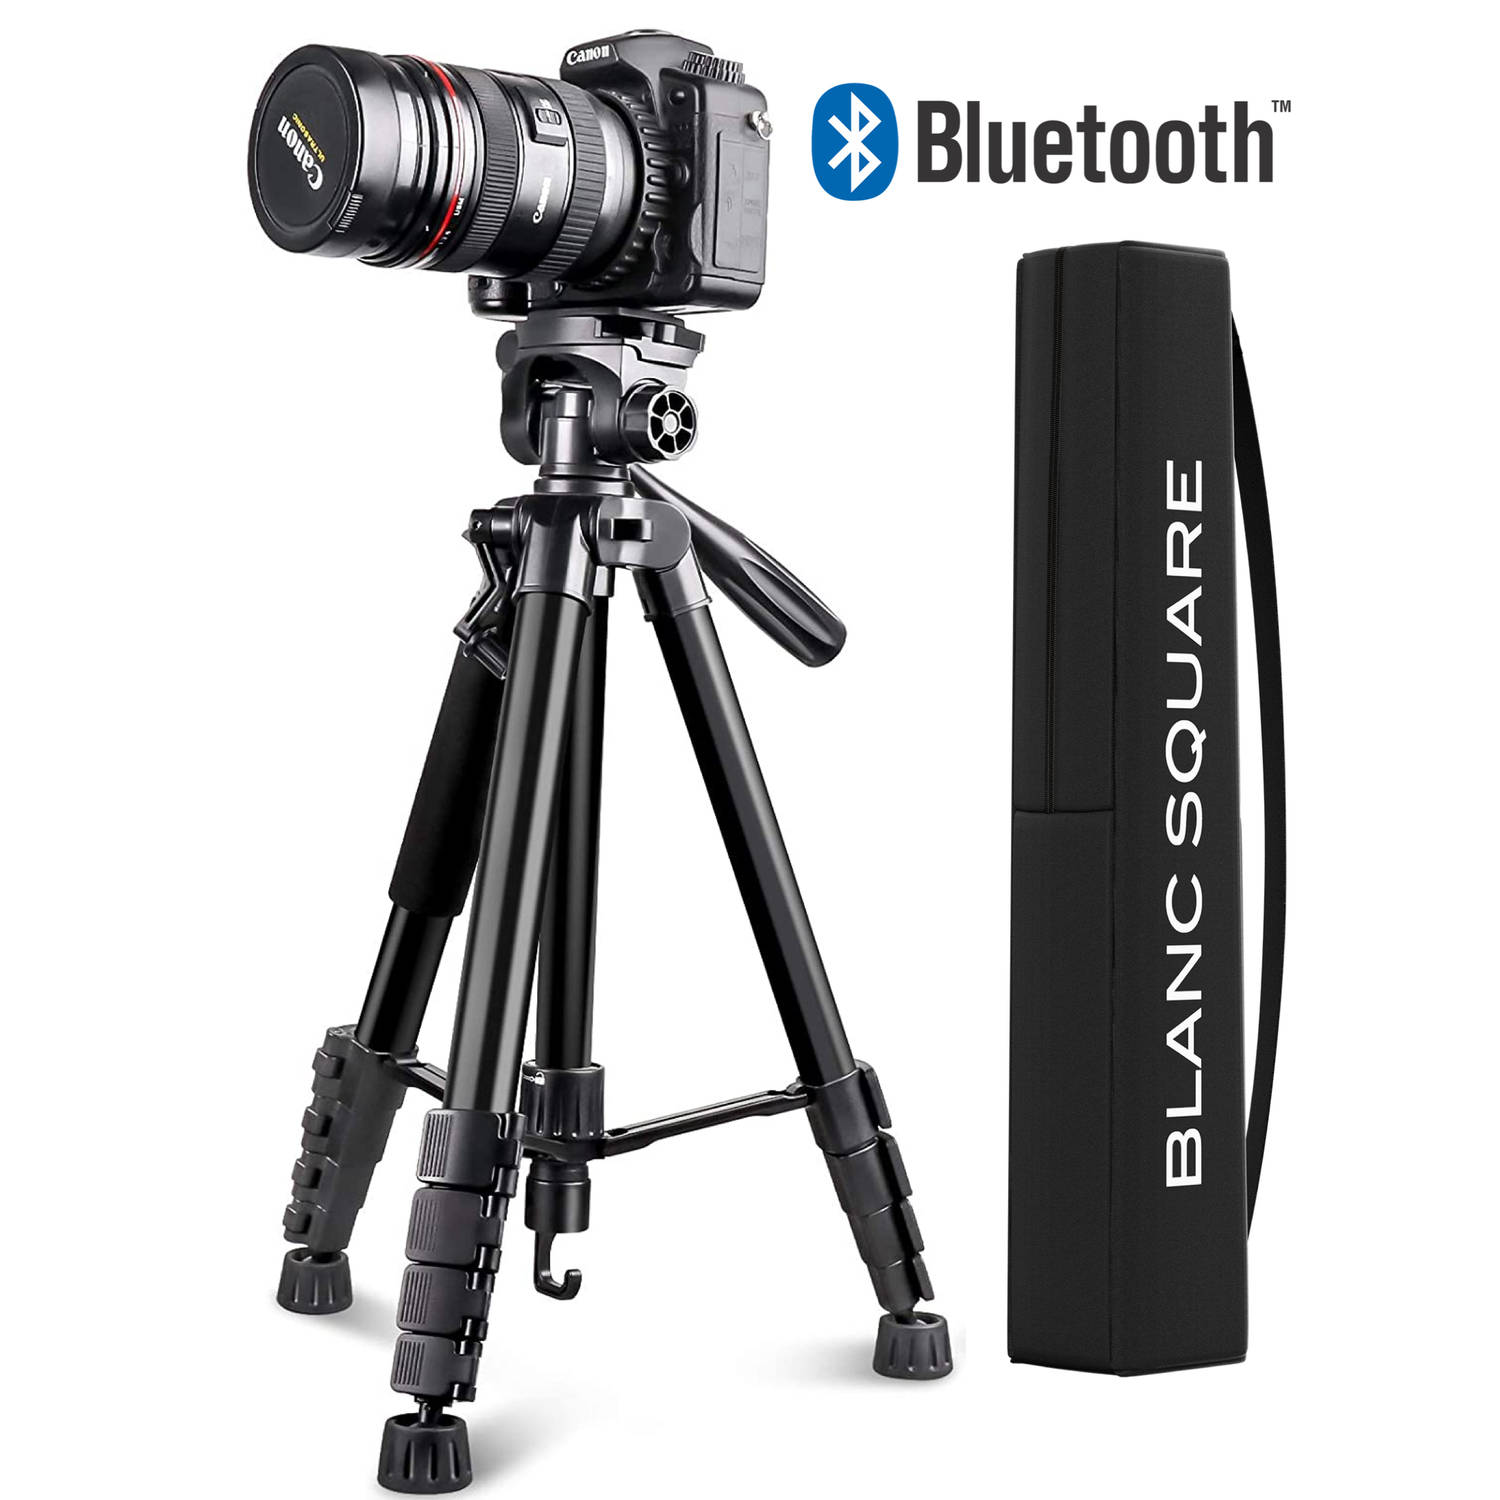 BS® Tripod Camerastatief - inclusief iPad & Smartphonehouder - 172cm Hoog - Gopro Canon Nikon Sony Spiegelreflex DSLR Camera - Gratis Bluetooth shutter t.w.v. € 14,95 -